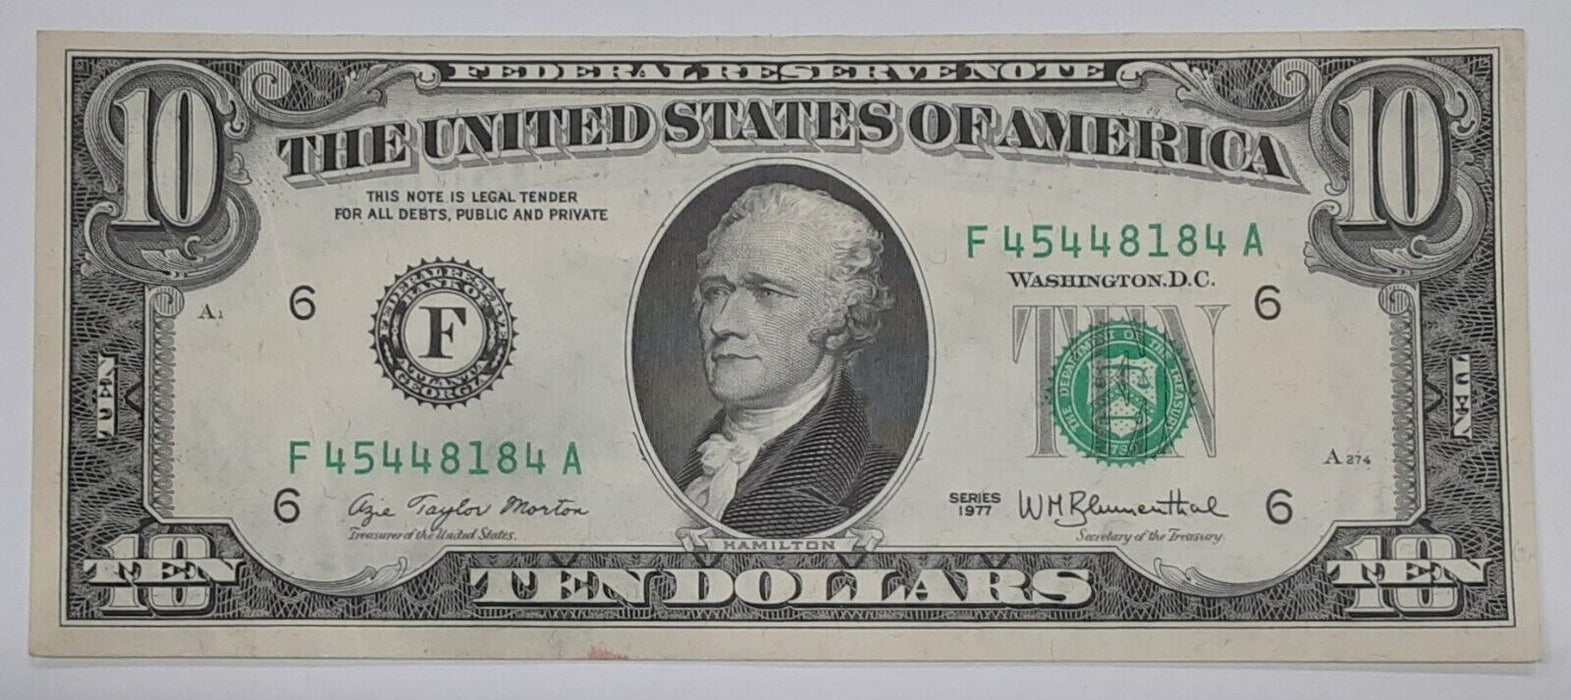 Series 1977 $10 Federal Reserve Note Atlanta Dist. w/Partial Offset Error